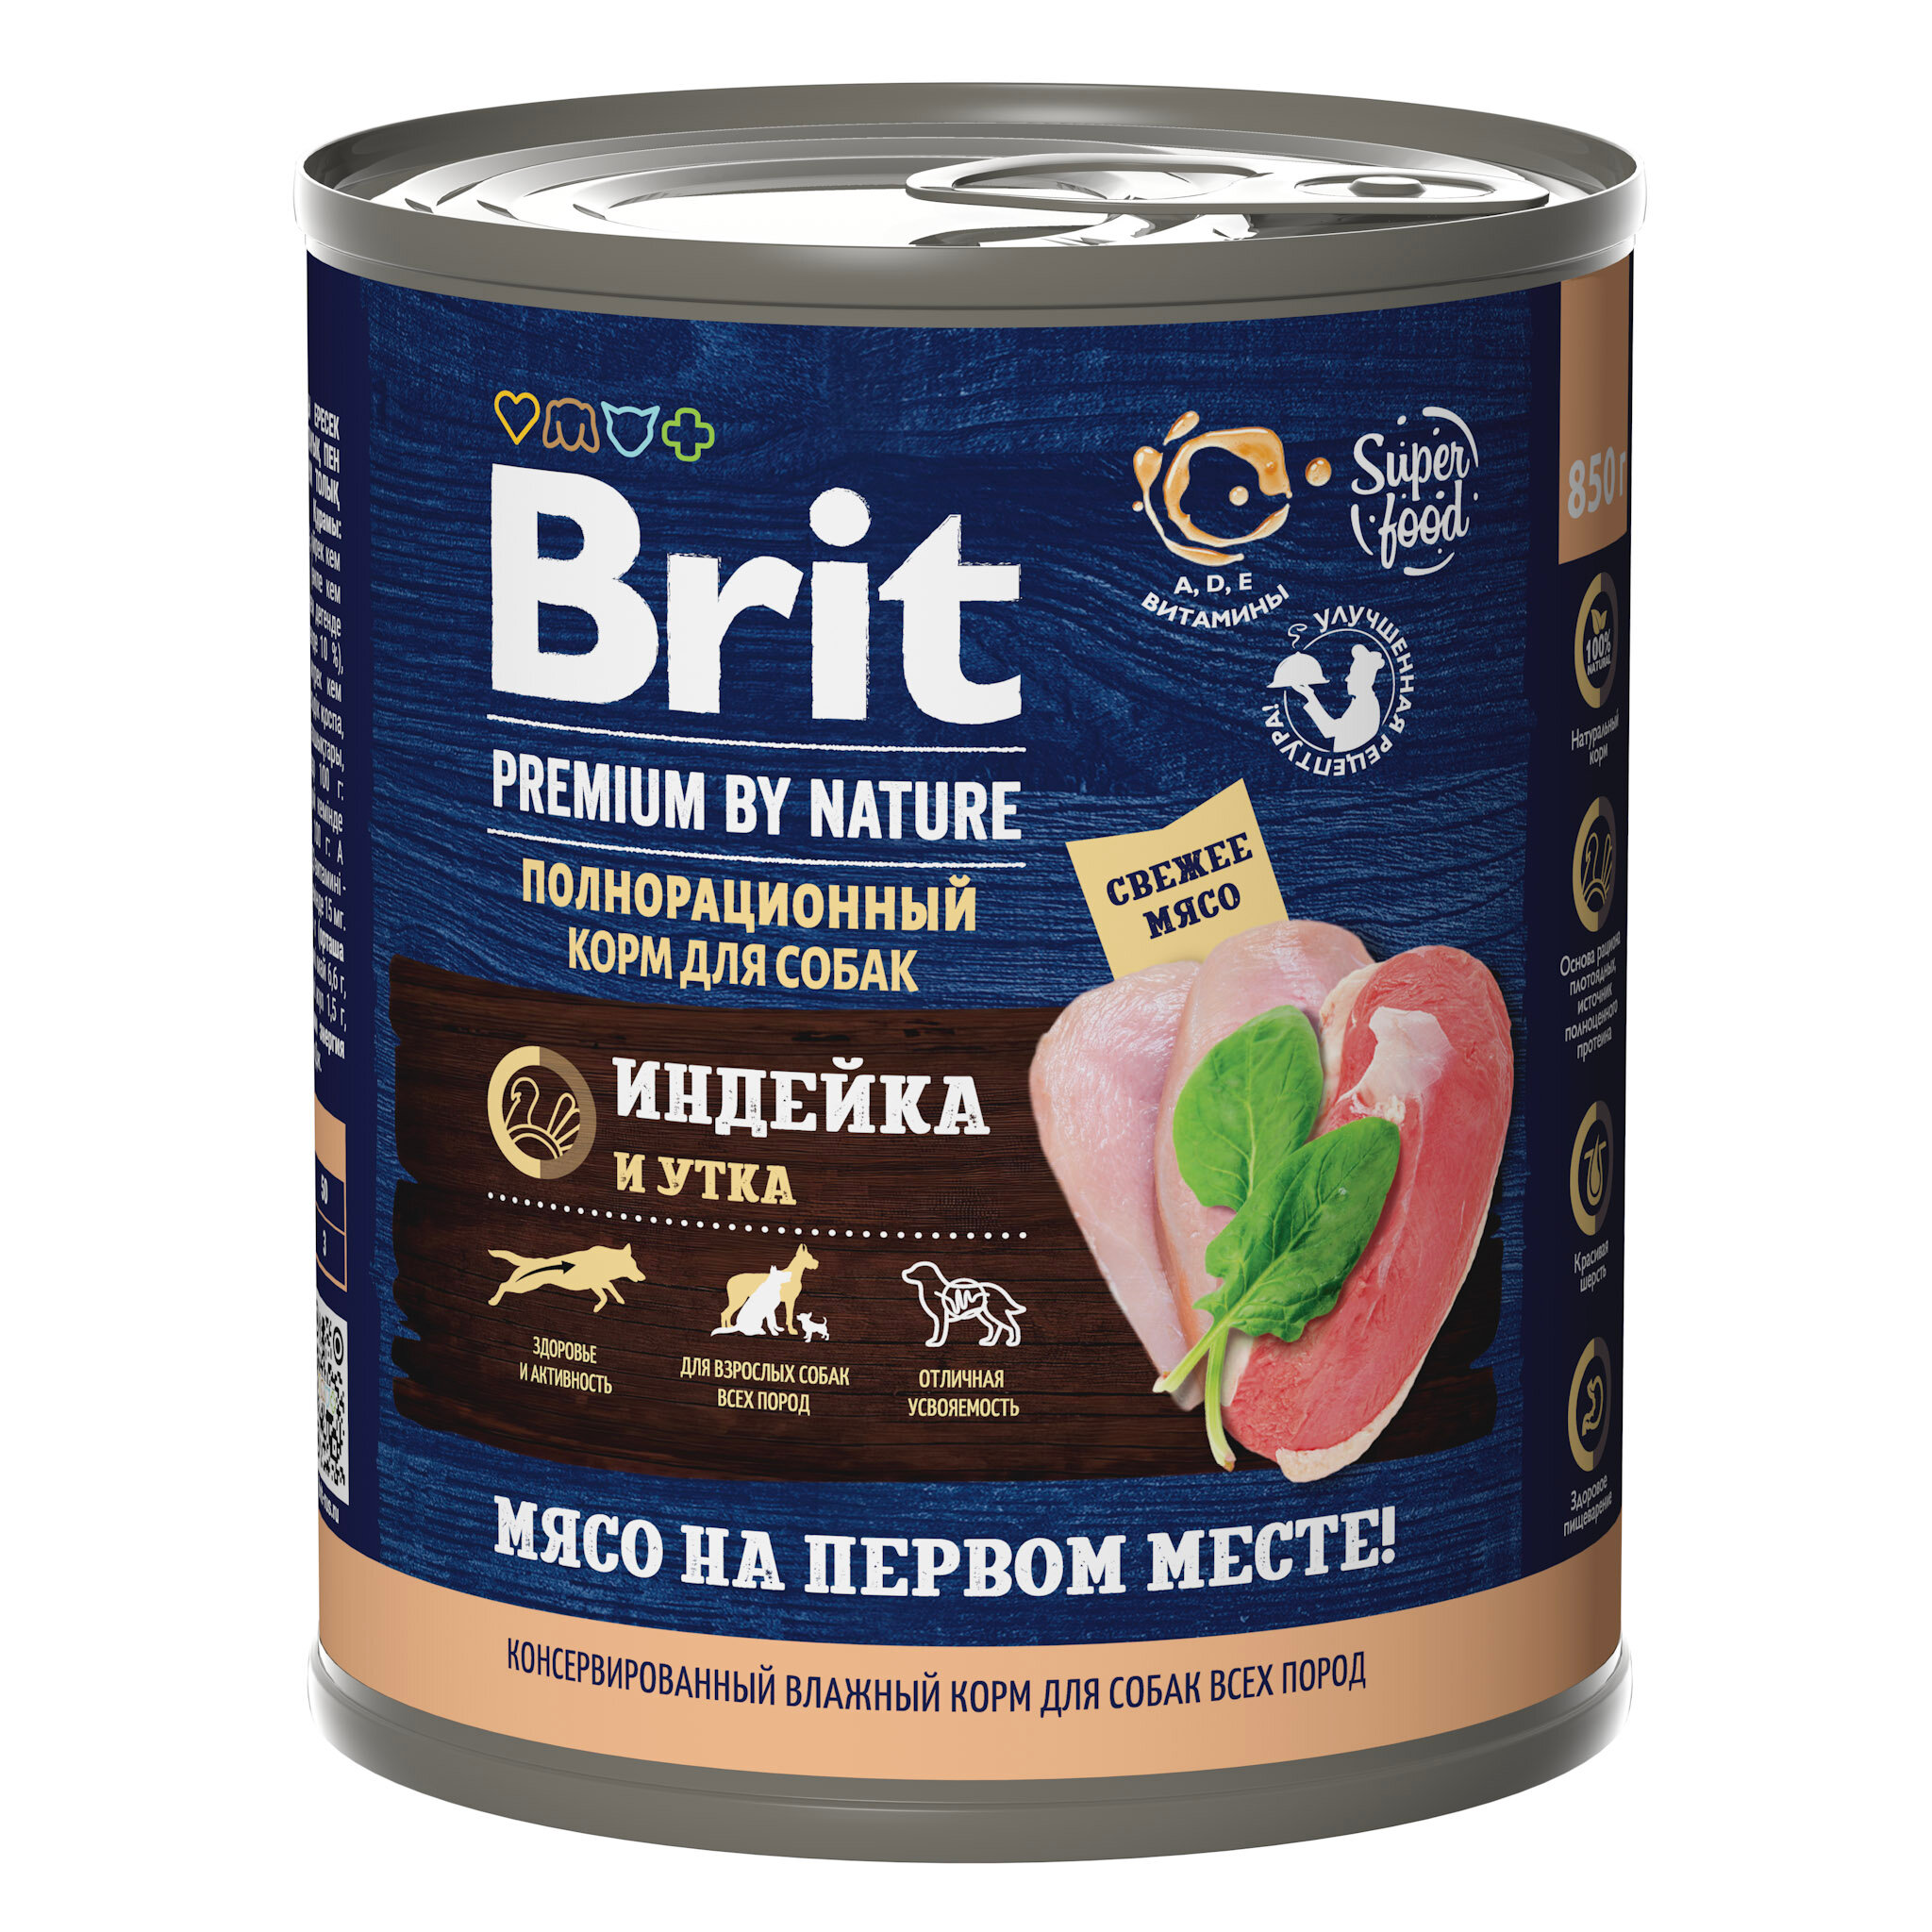 Влажный корм для собак Brit Premium by Nature 850 г